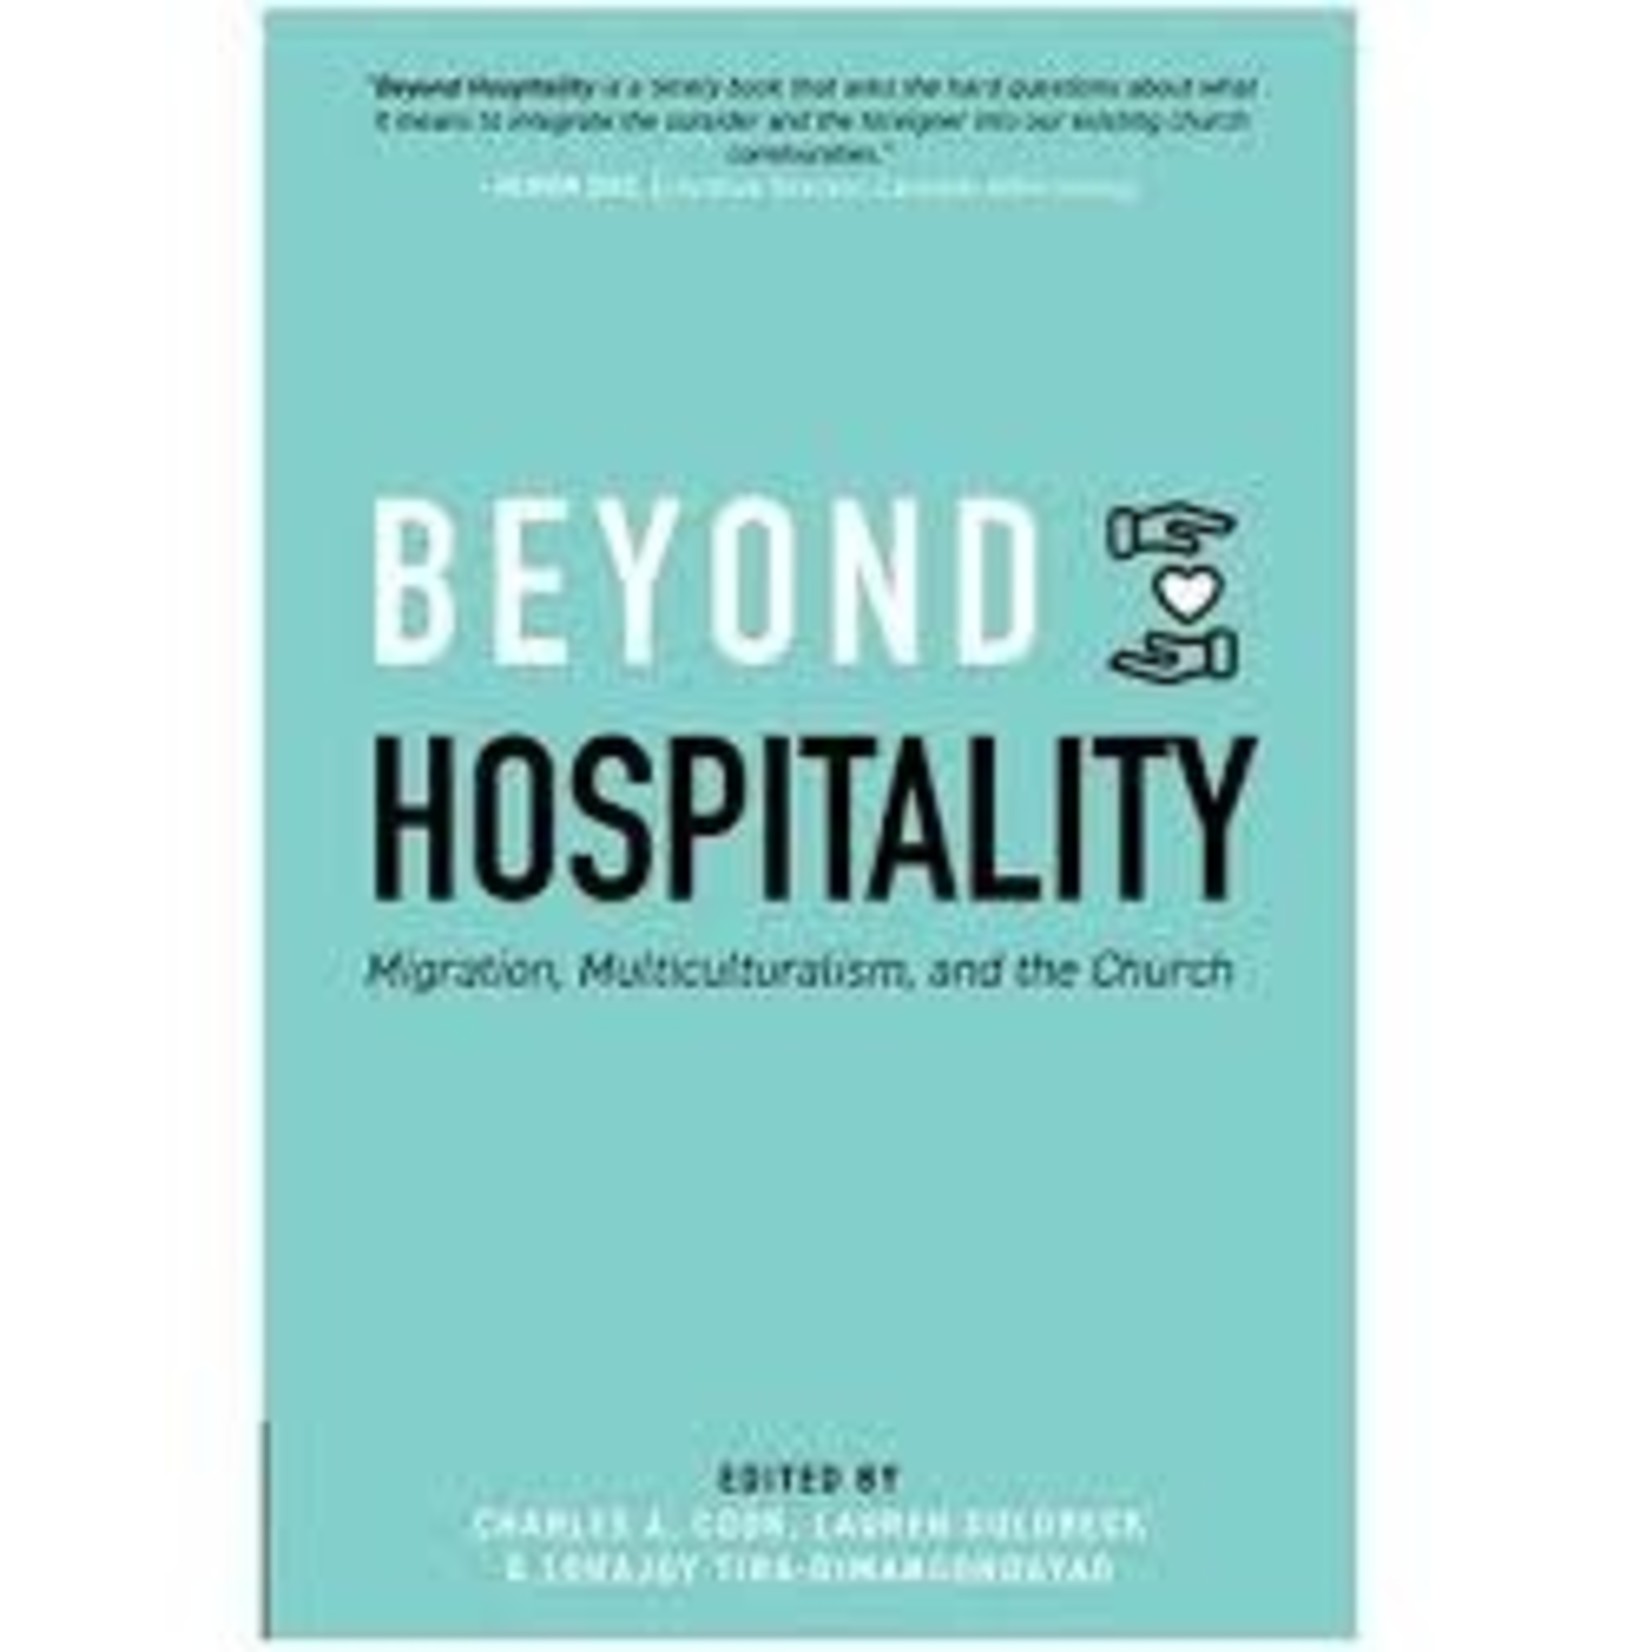 Beyond Hospitality